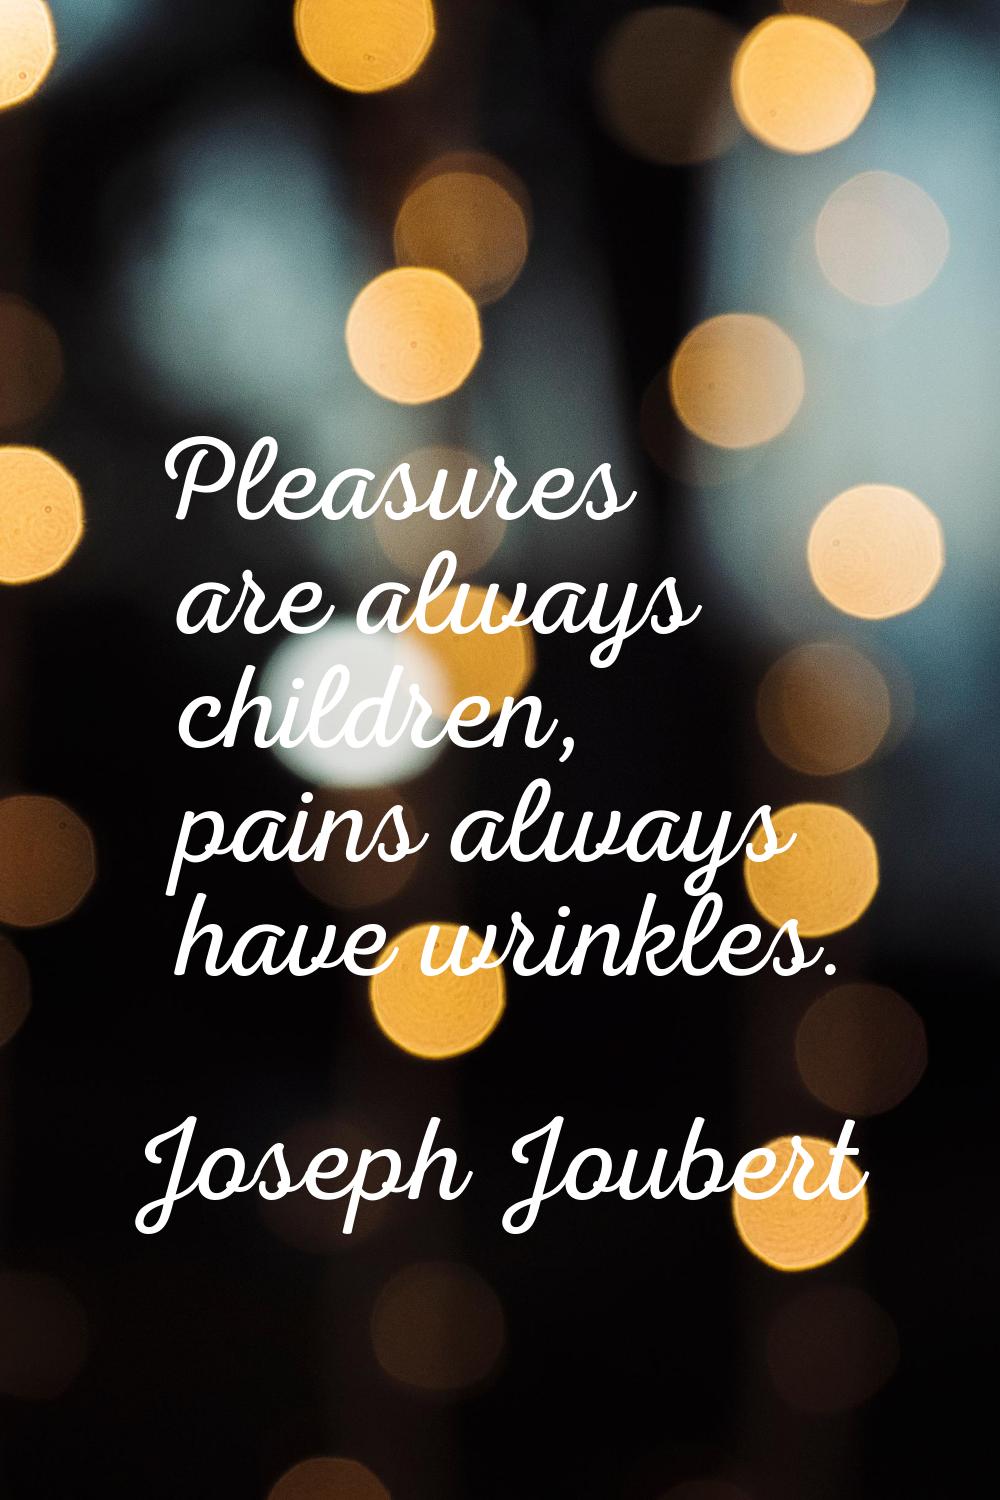 Pleasures are always children, pains always have wrinkles.